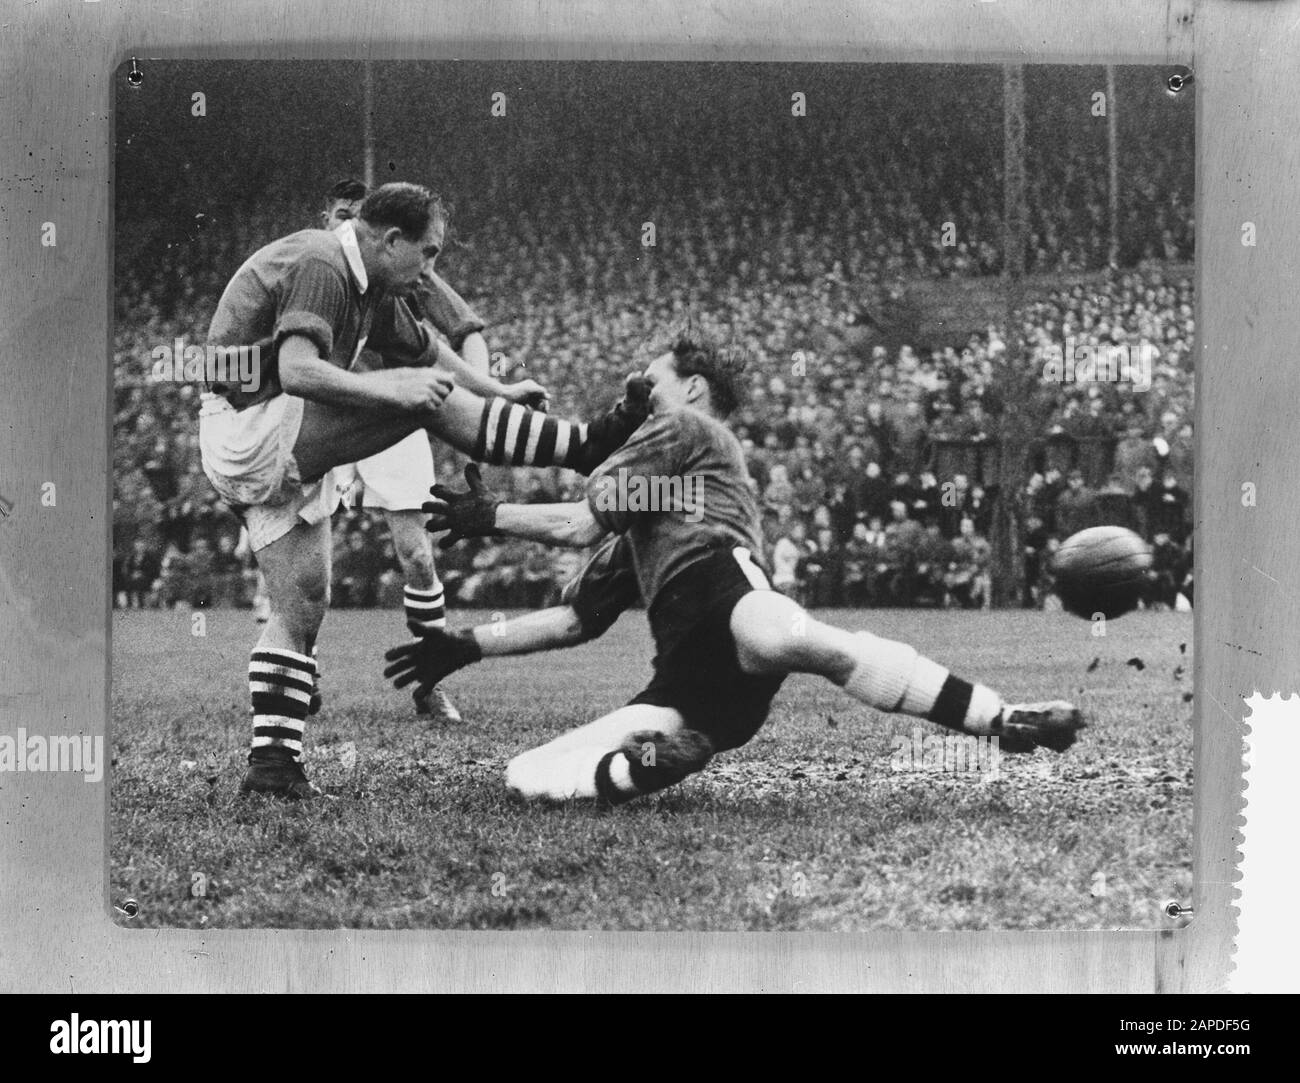 Mejor fotografía de deportes por inglés Robert Edwards Fecha: 11 de abril de 1958 Foto de stock